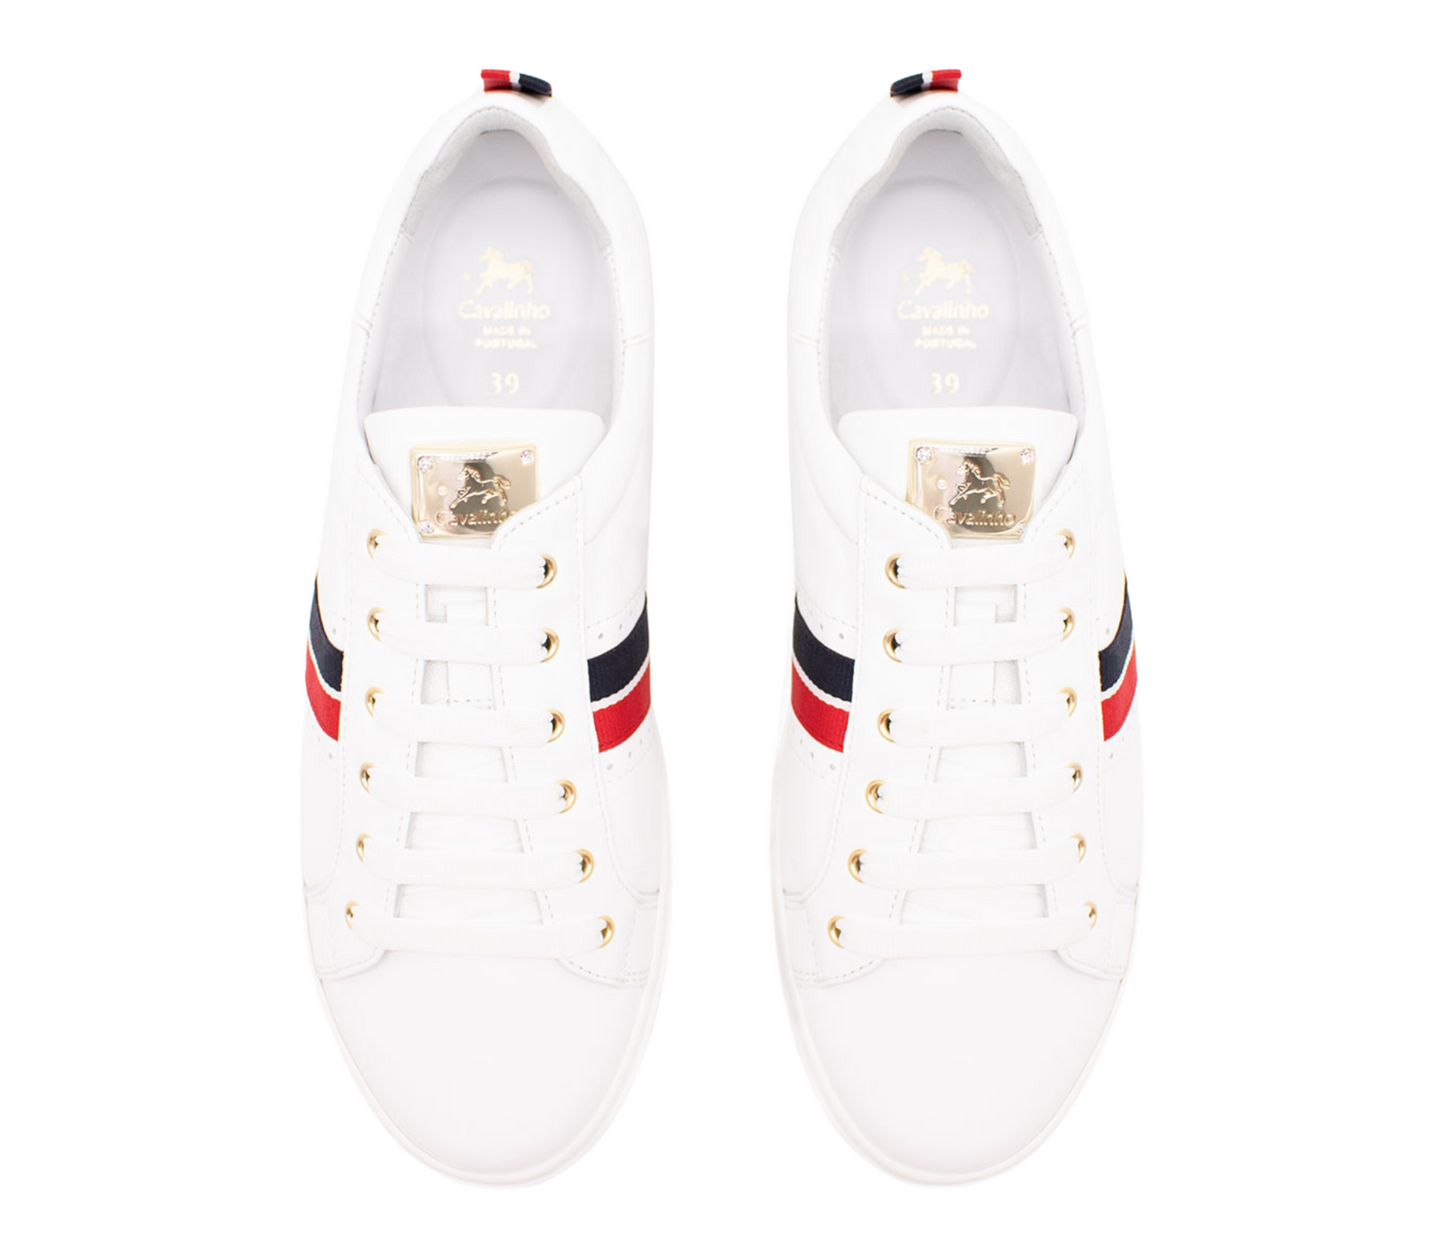 Cavalinho Nautical Sneakers - White Navy Red - 48010109.23_P04